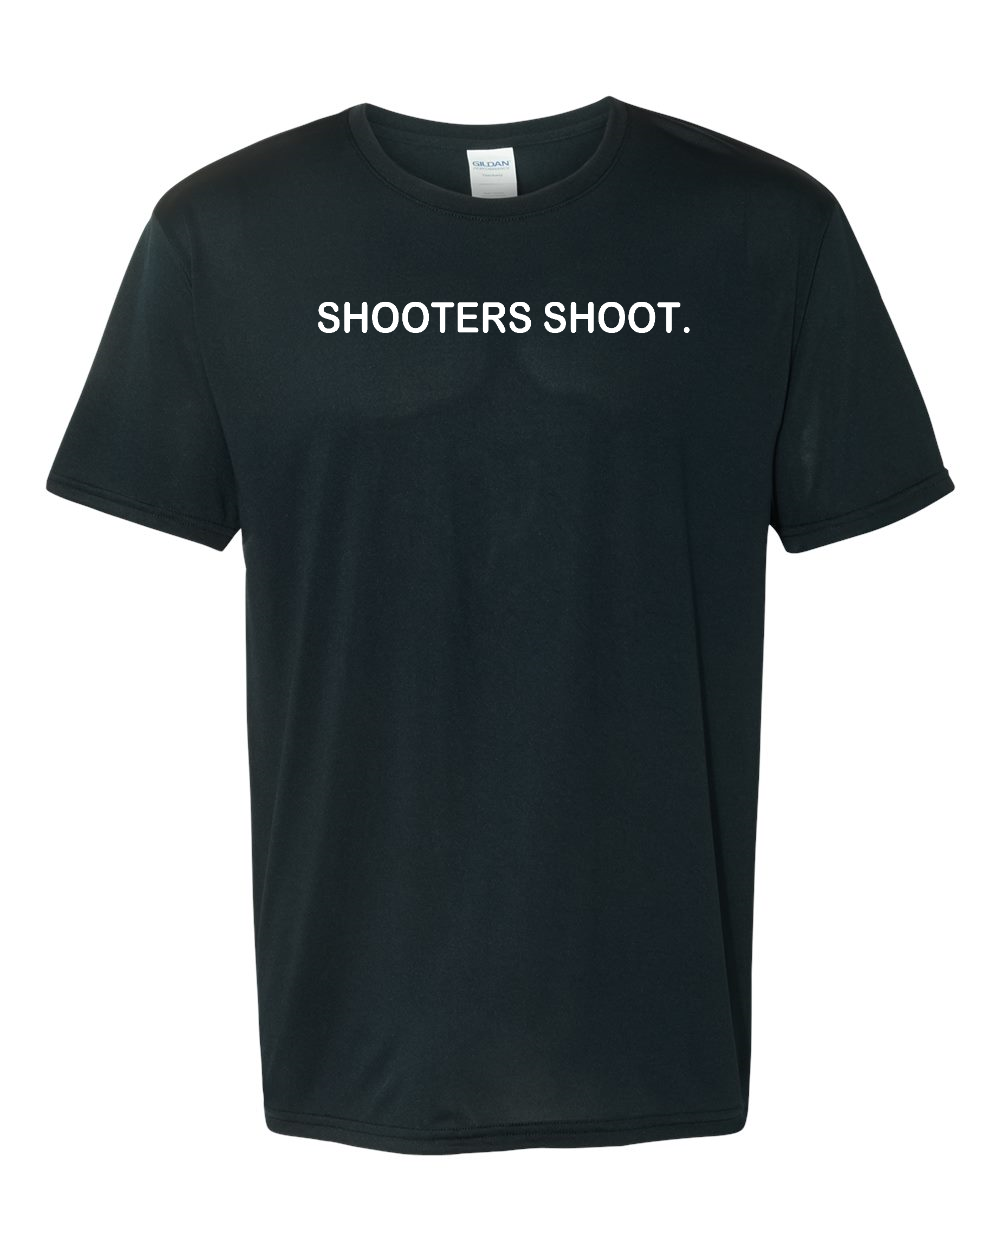 JJ Reddick Shooters Shoot Shirt